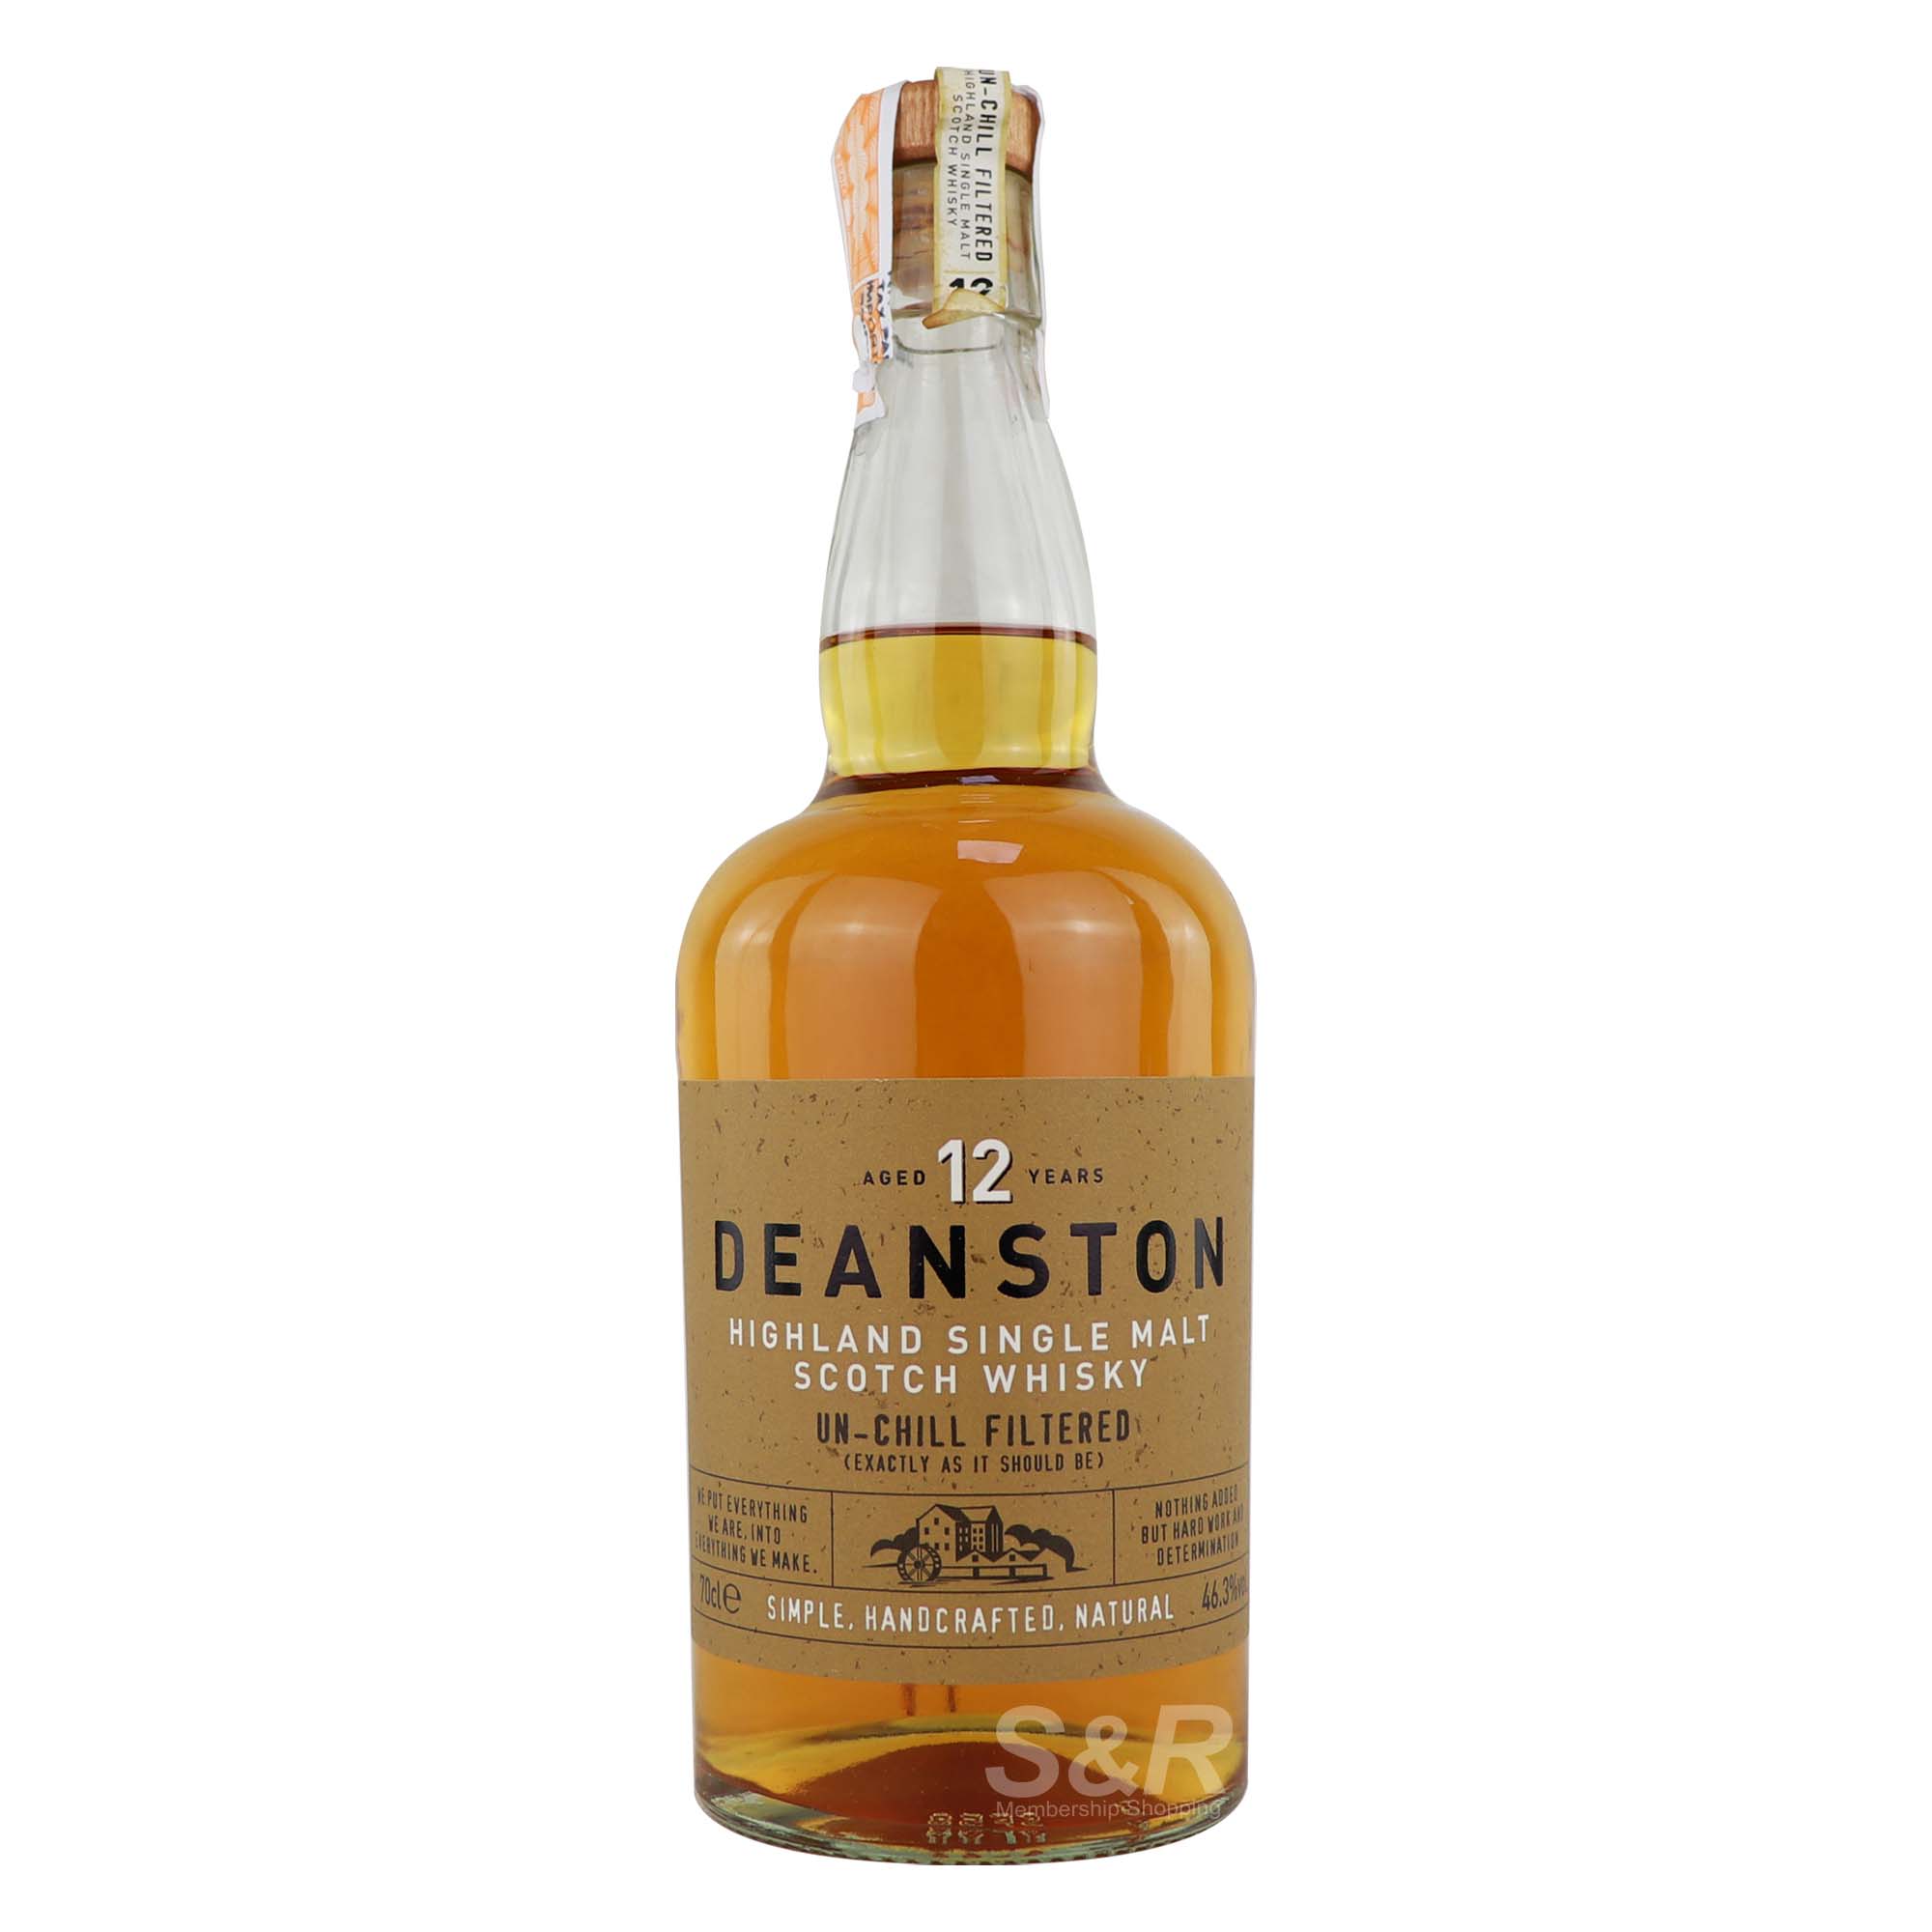 Deanston Aged 12 Years Highland Single Malt Scotch Whisky 700mL